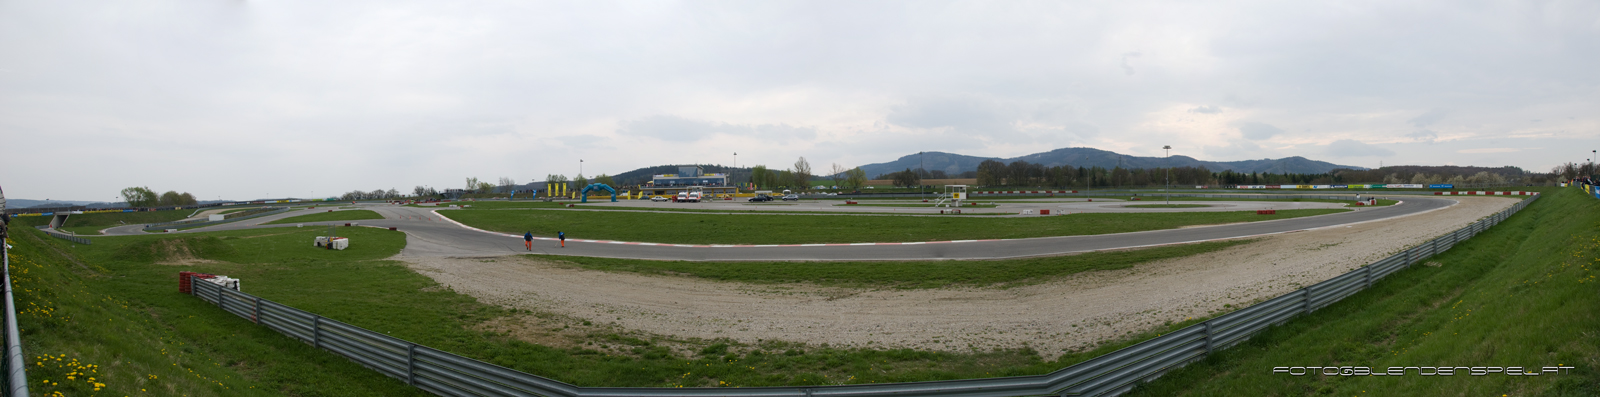 [Bild: Histo-Cup-Austria-Panorama.jpg]